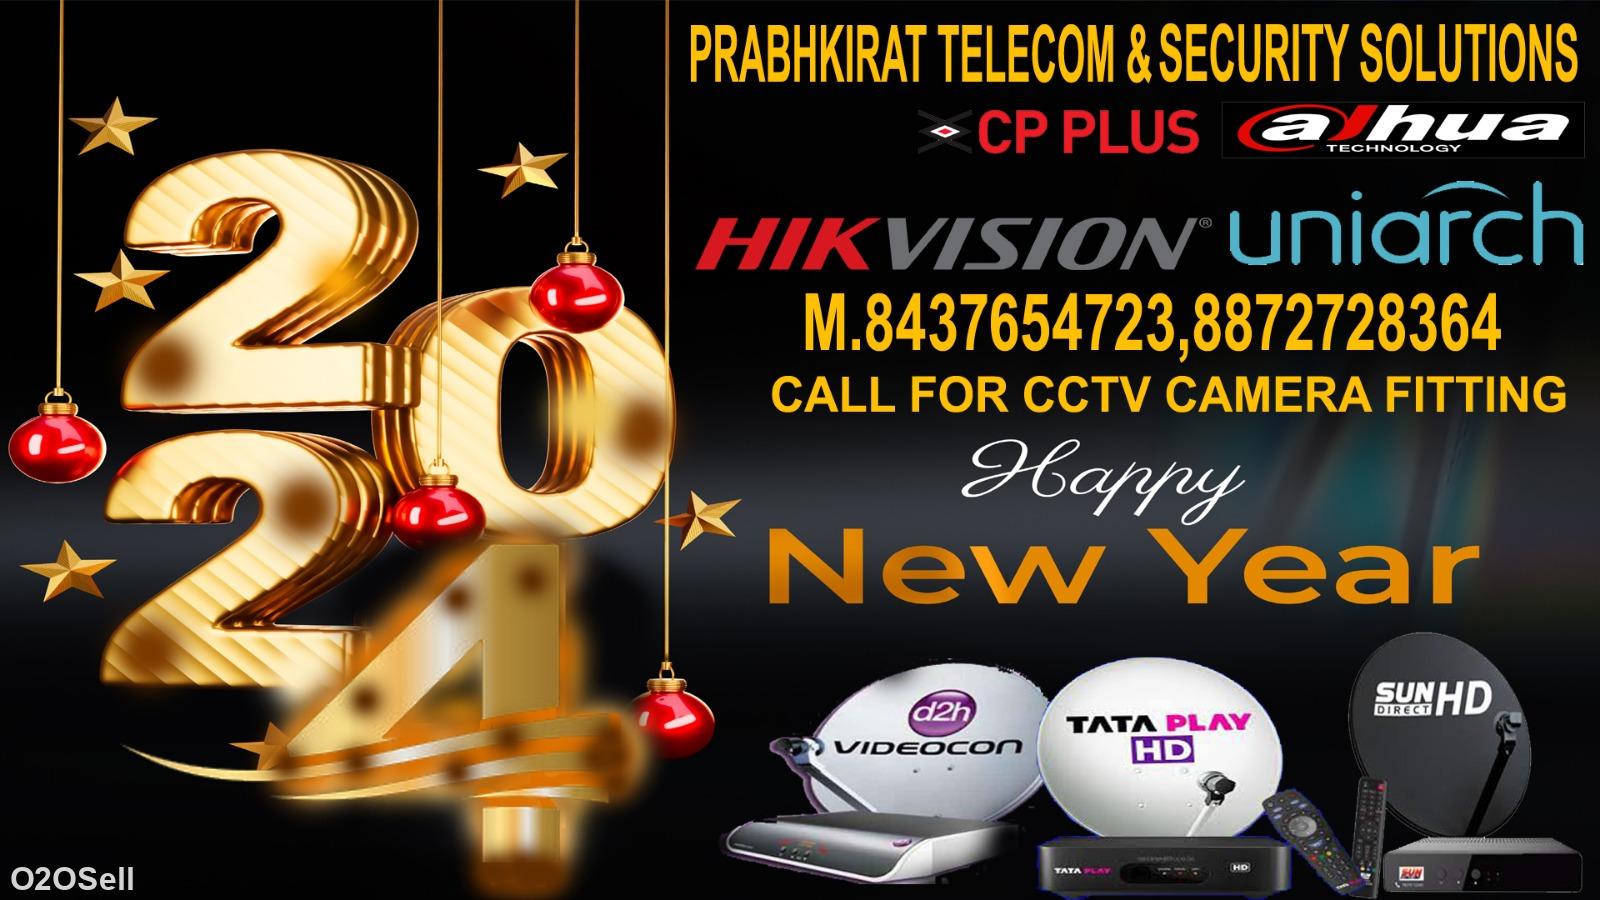 Prabhkirat telecom& security solutions  - Profile Image